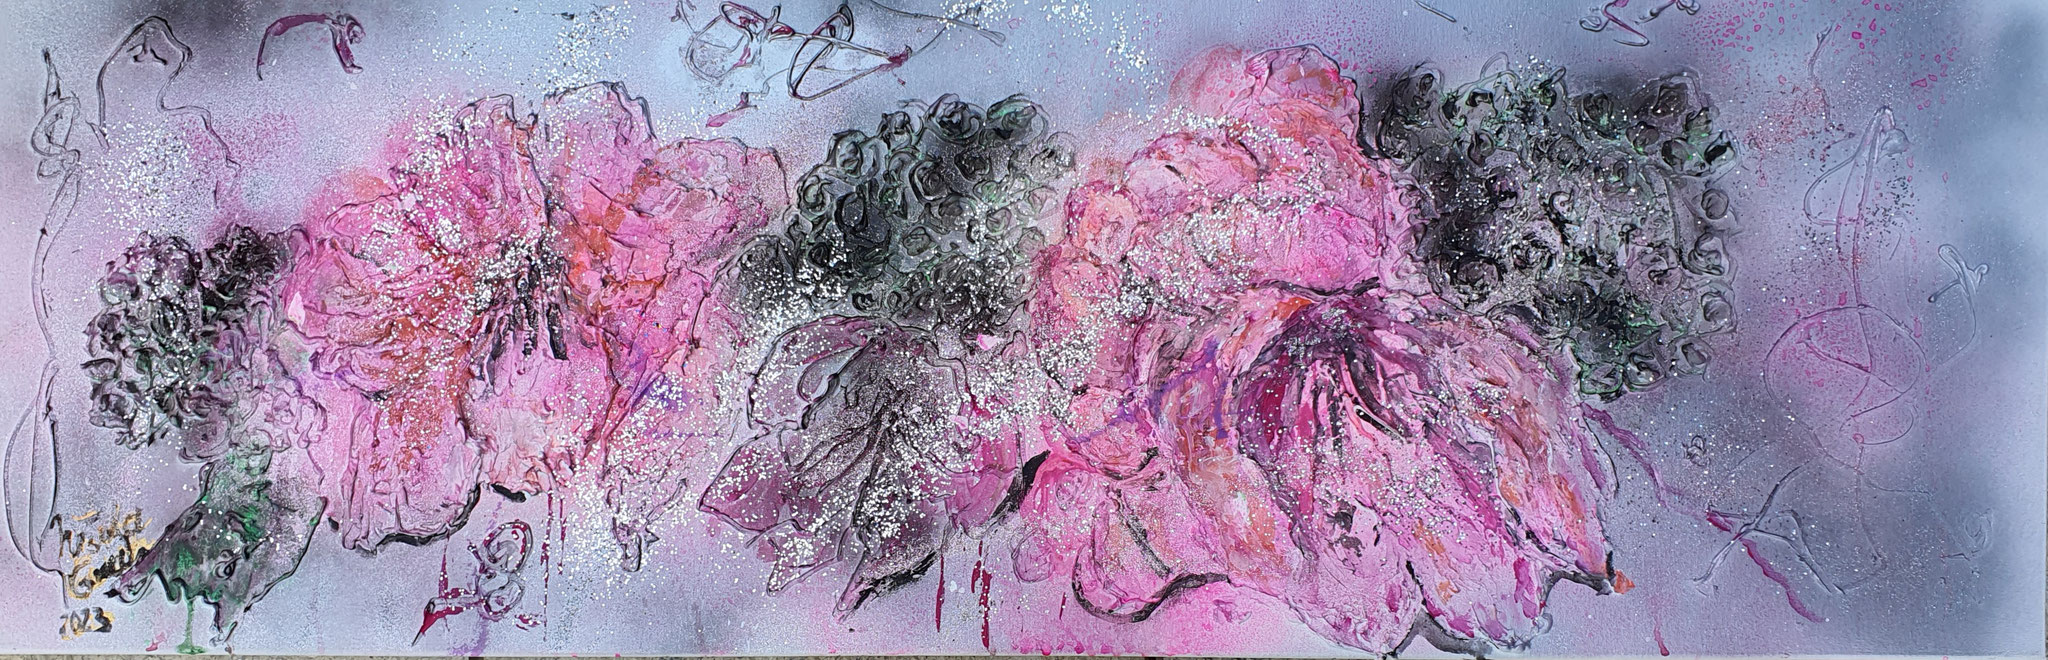 flowers of love (Technic: Acrylic, Spray,Glitter Mixed Media)  on Canvas 40 X 120 x 1,5 cm